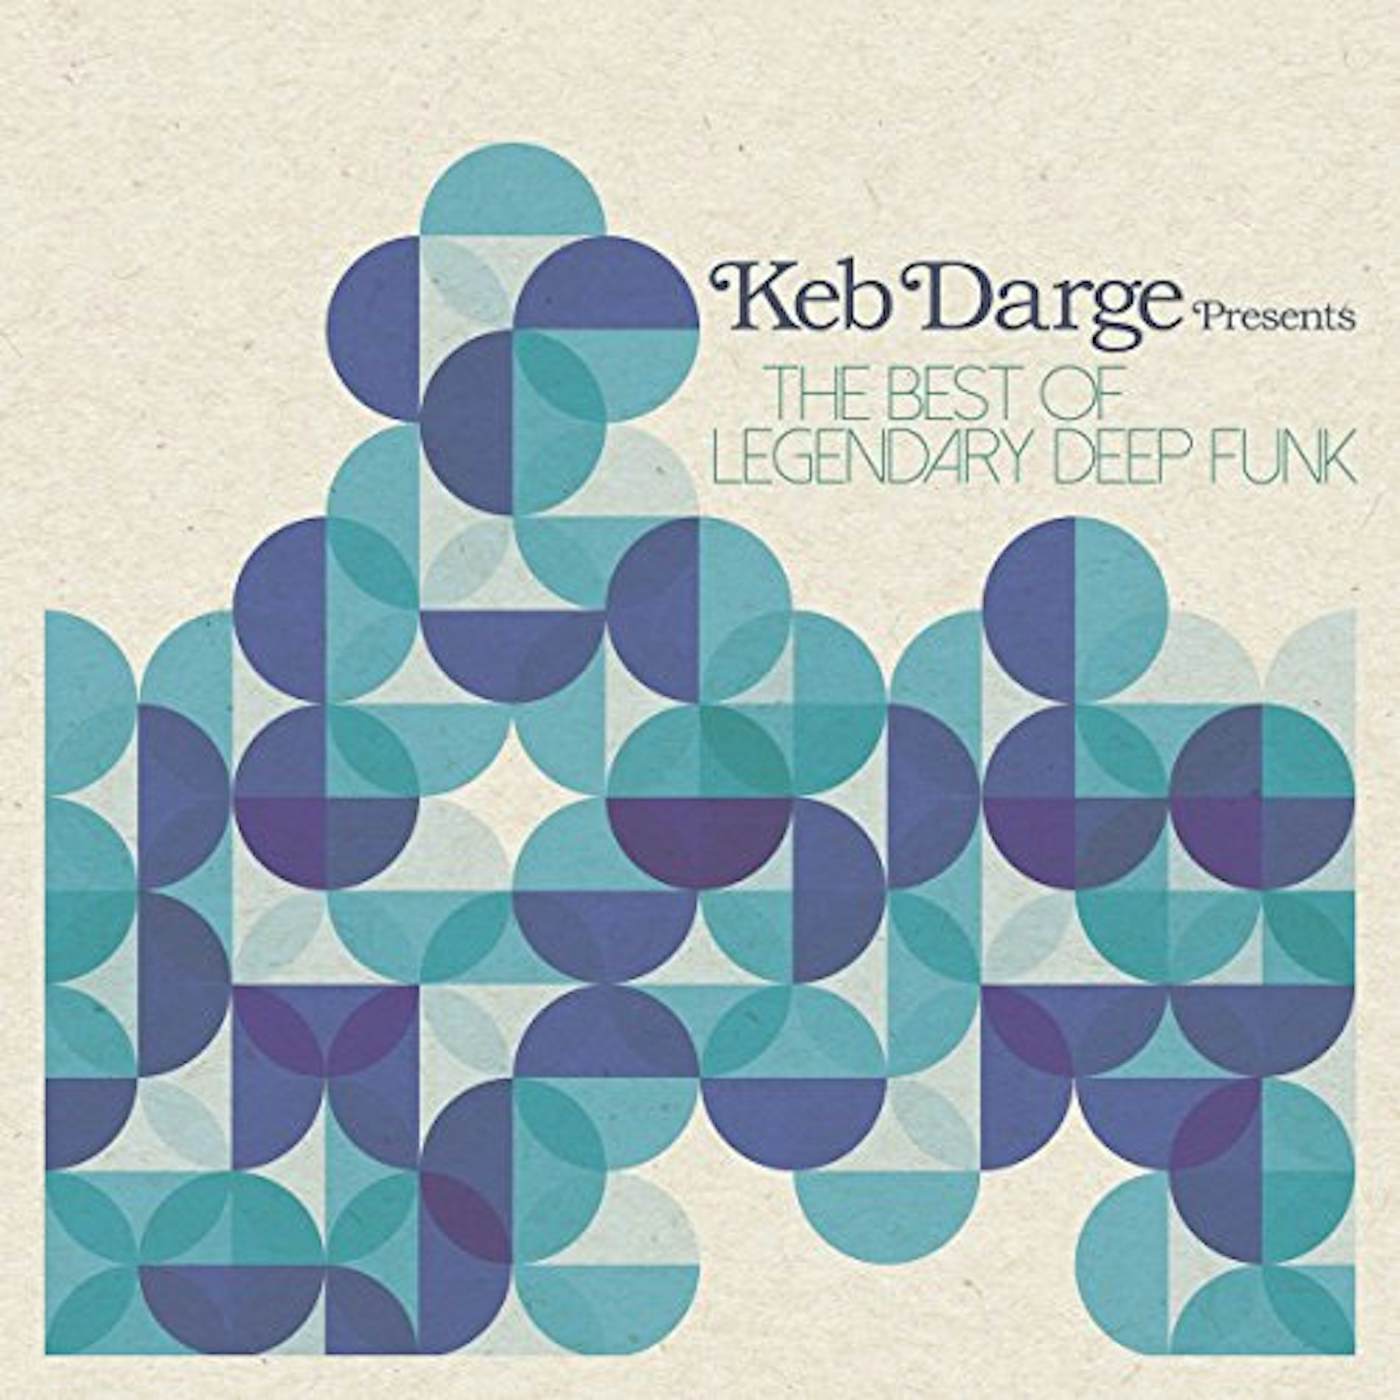 KEB DARGE PRESENTS BEST OF LEGENDARY DEEP / VAR Vinyl Record